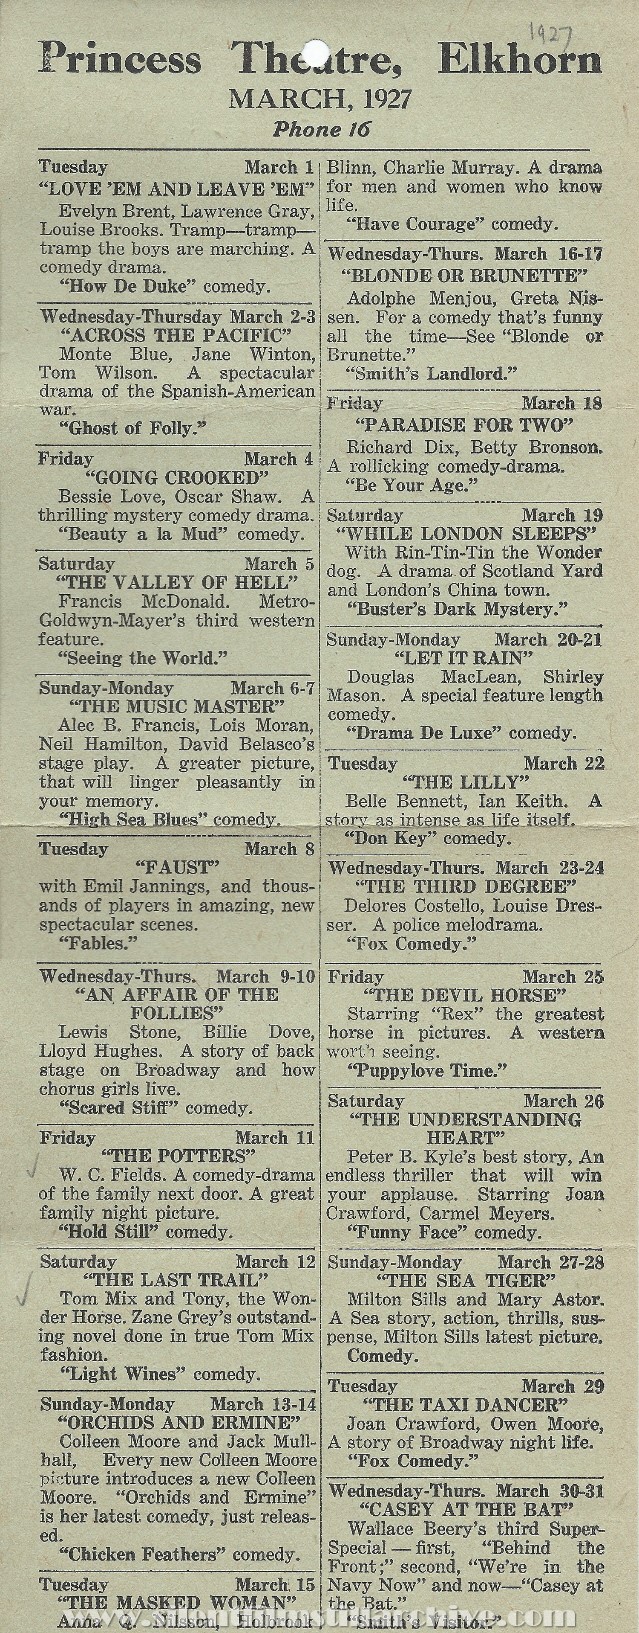 Princess Theatre program, Elkhorn, Wisconsin, March, 1927